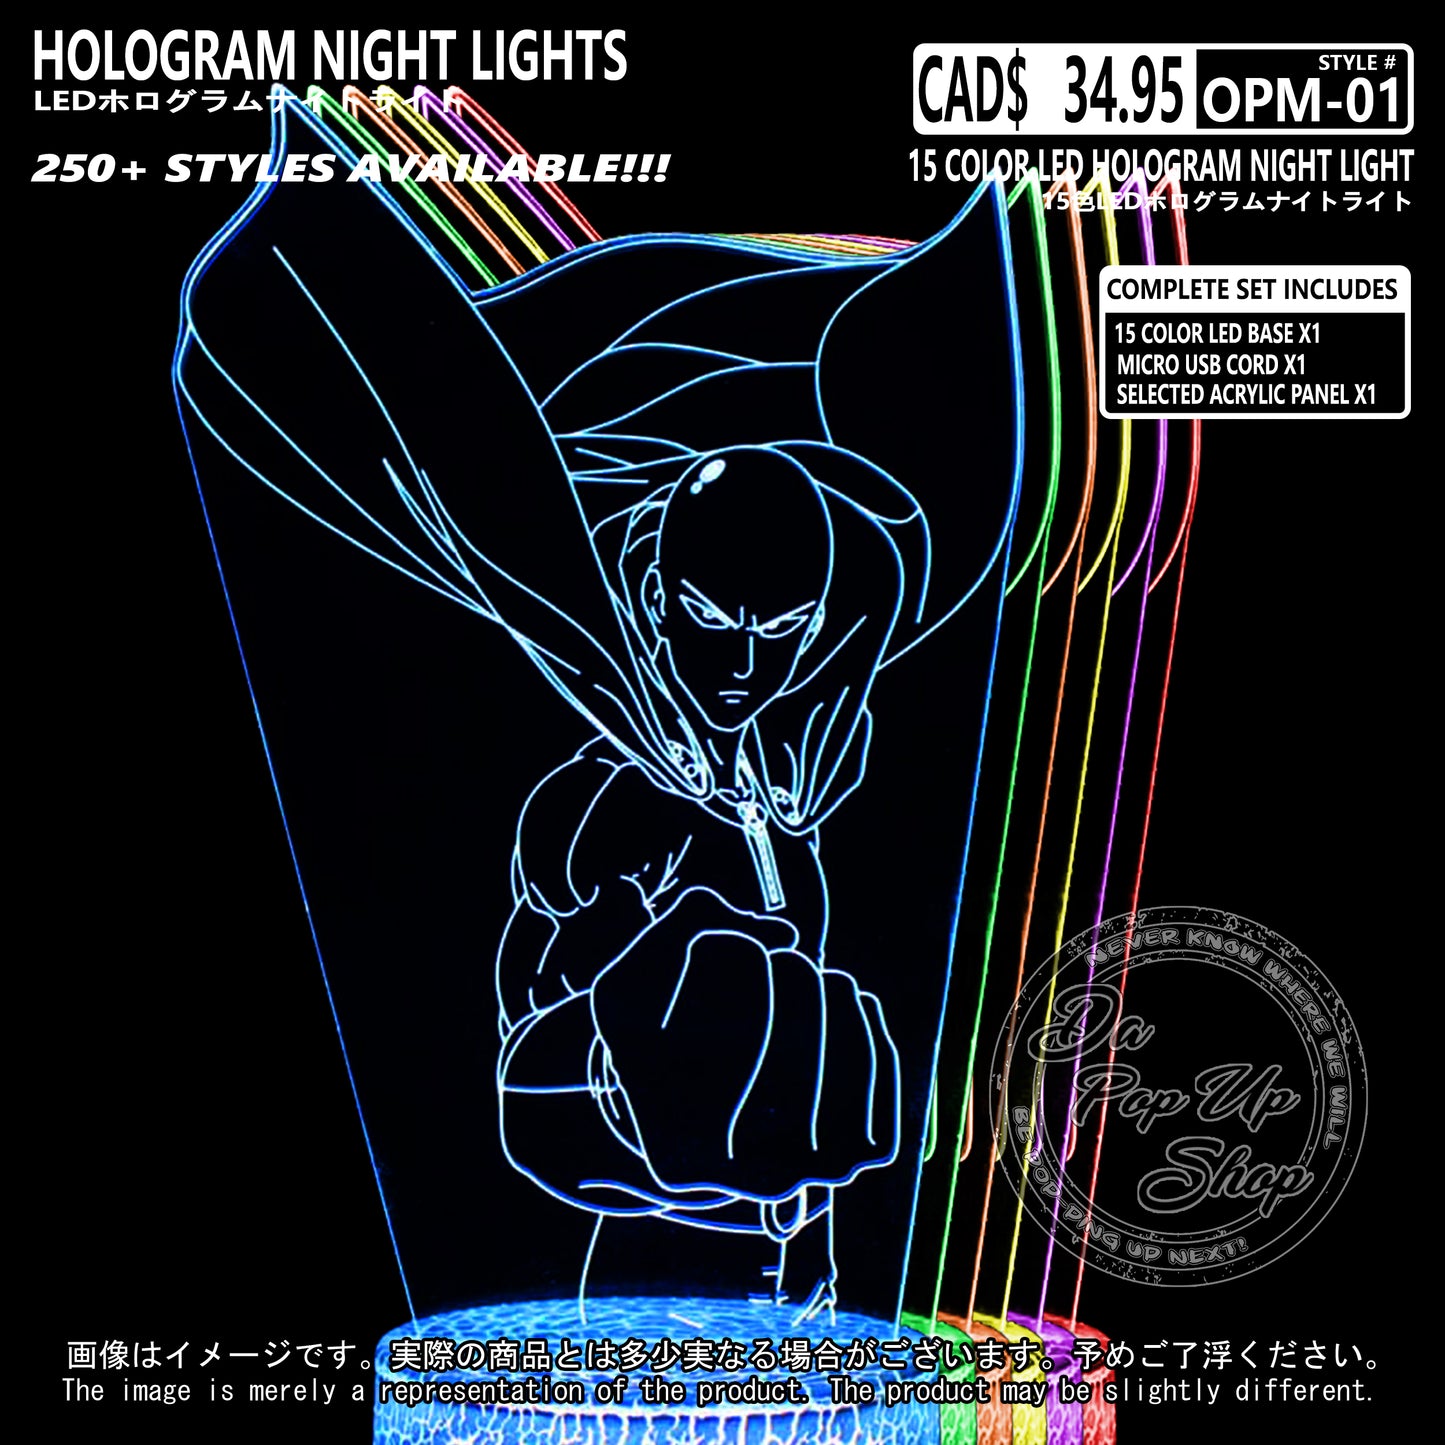 (OPM-01) One Punch Man Hologram LED Night Light